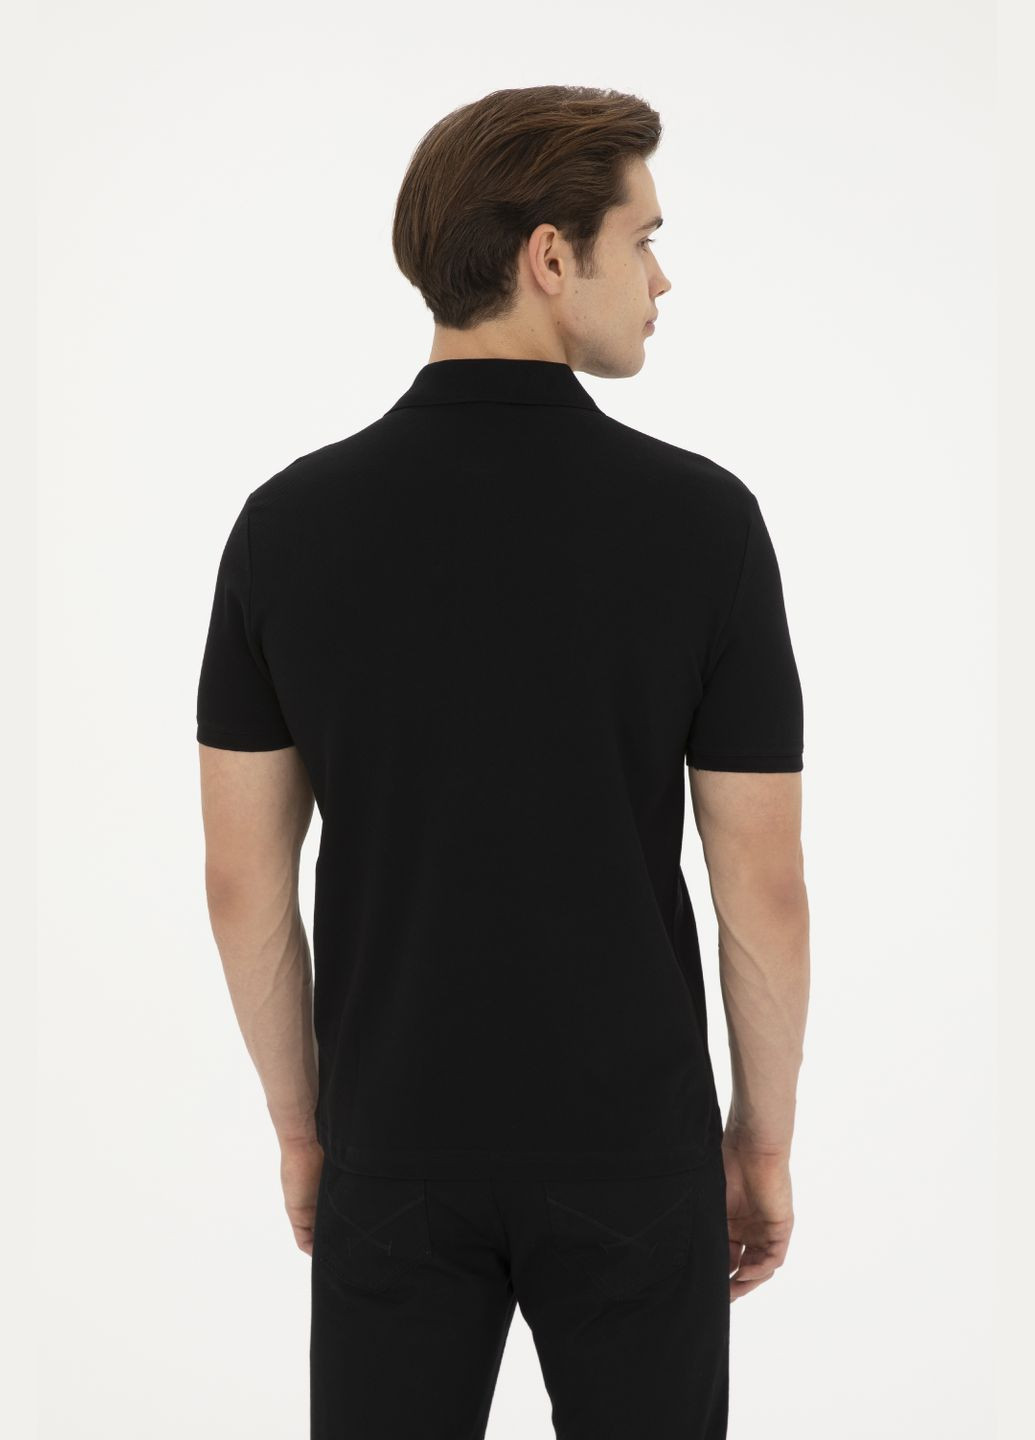 Черная футболка поло мужское U.S. Polo Assn.